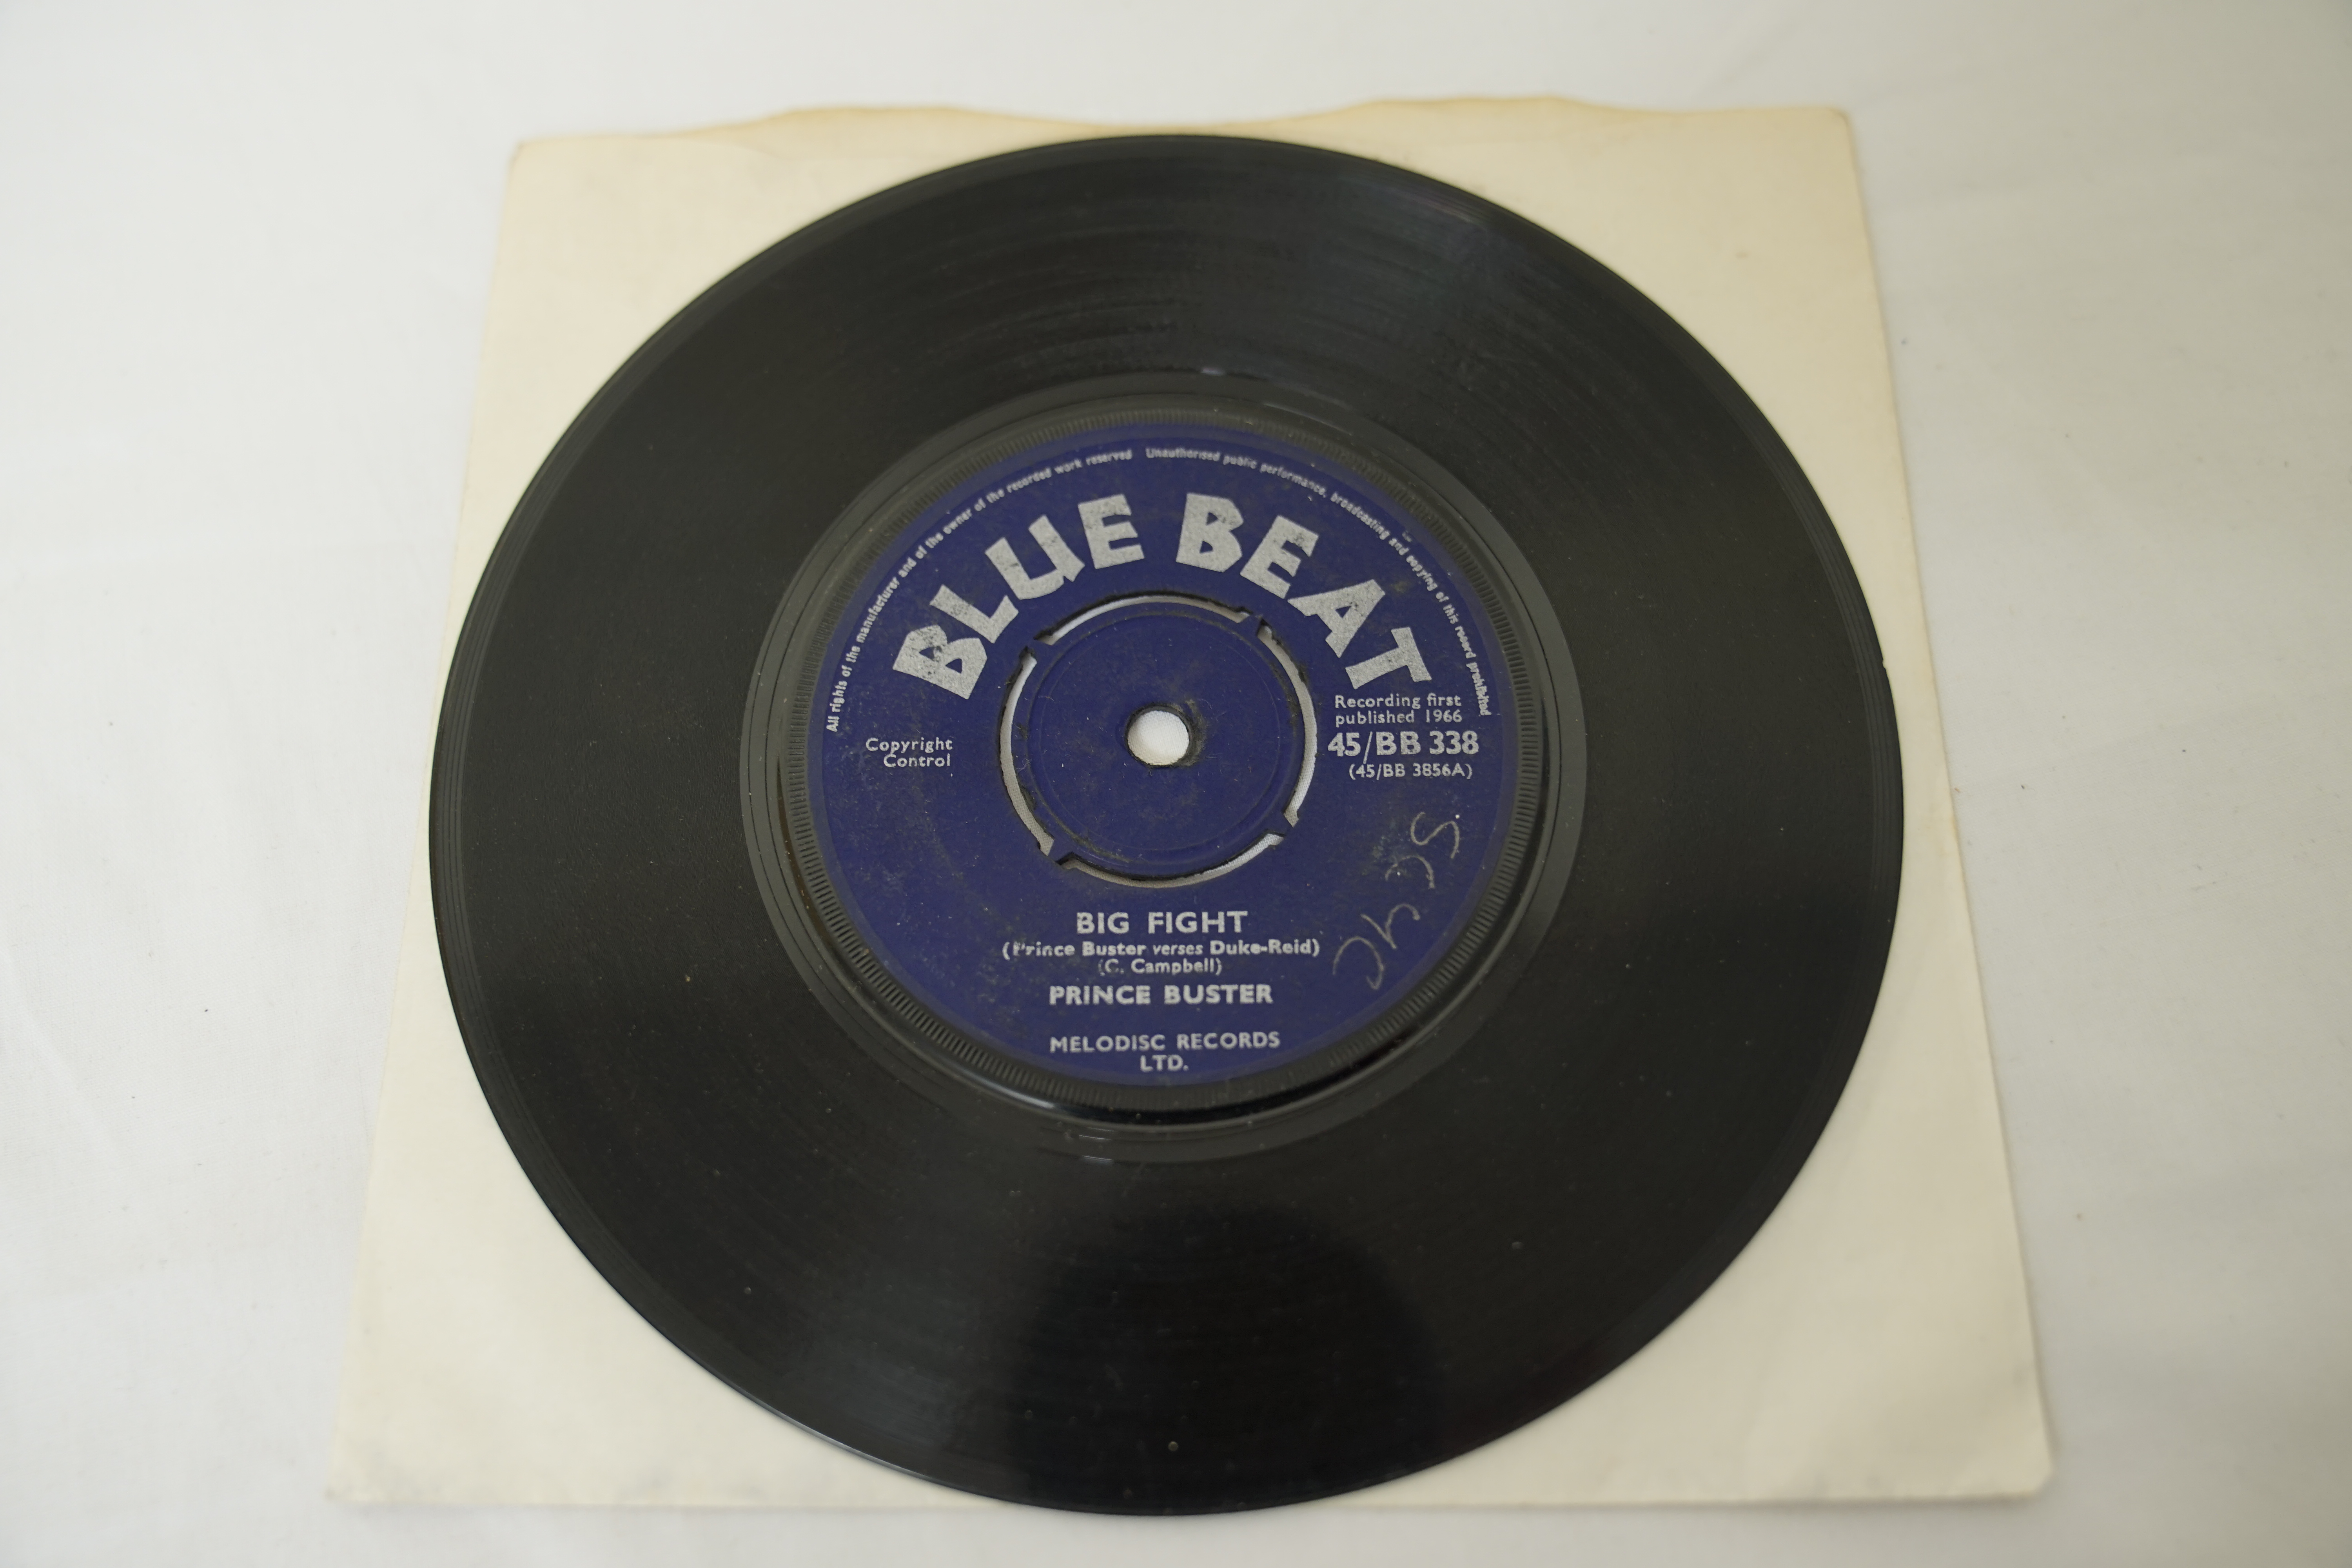 Vinyl - 6 UK Blue Beat Records / Prince Buster 7" singles, Reggae / Ska / Skinhead Reggae, - Image 12 of 25